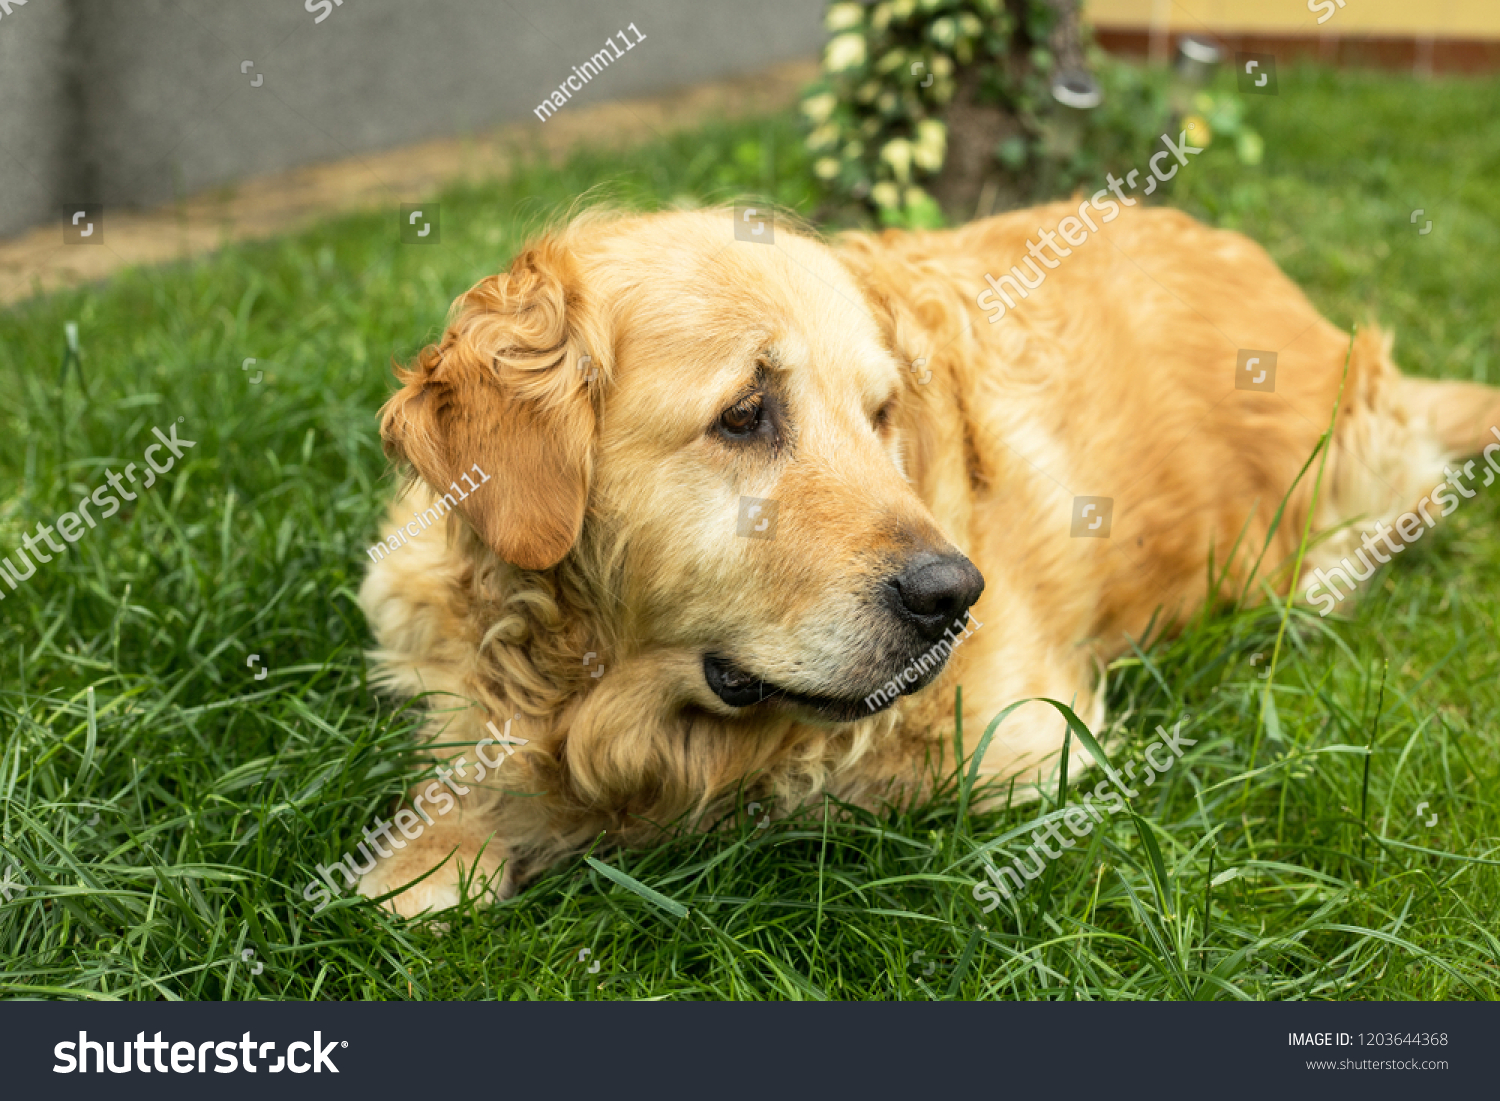 golden retriever dog backyard portrait #1203644368